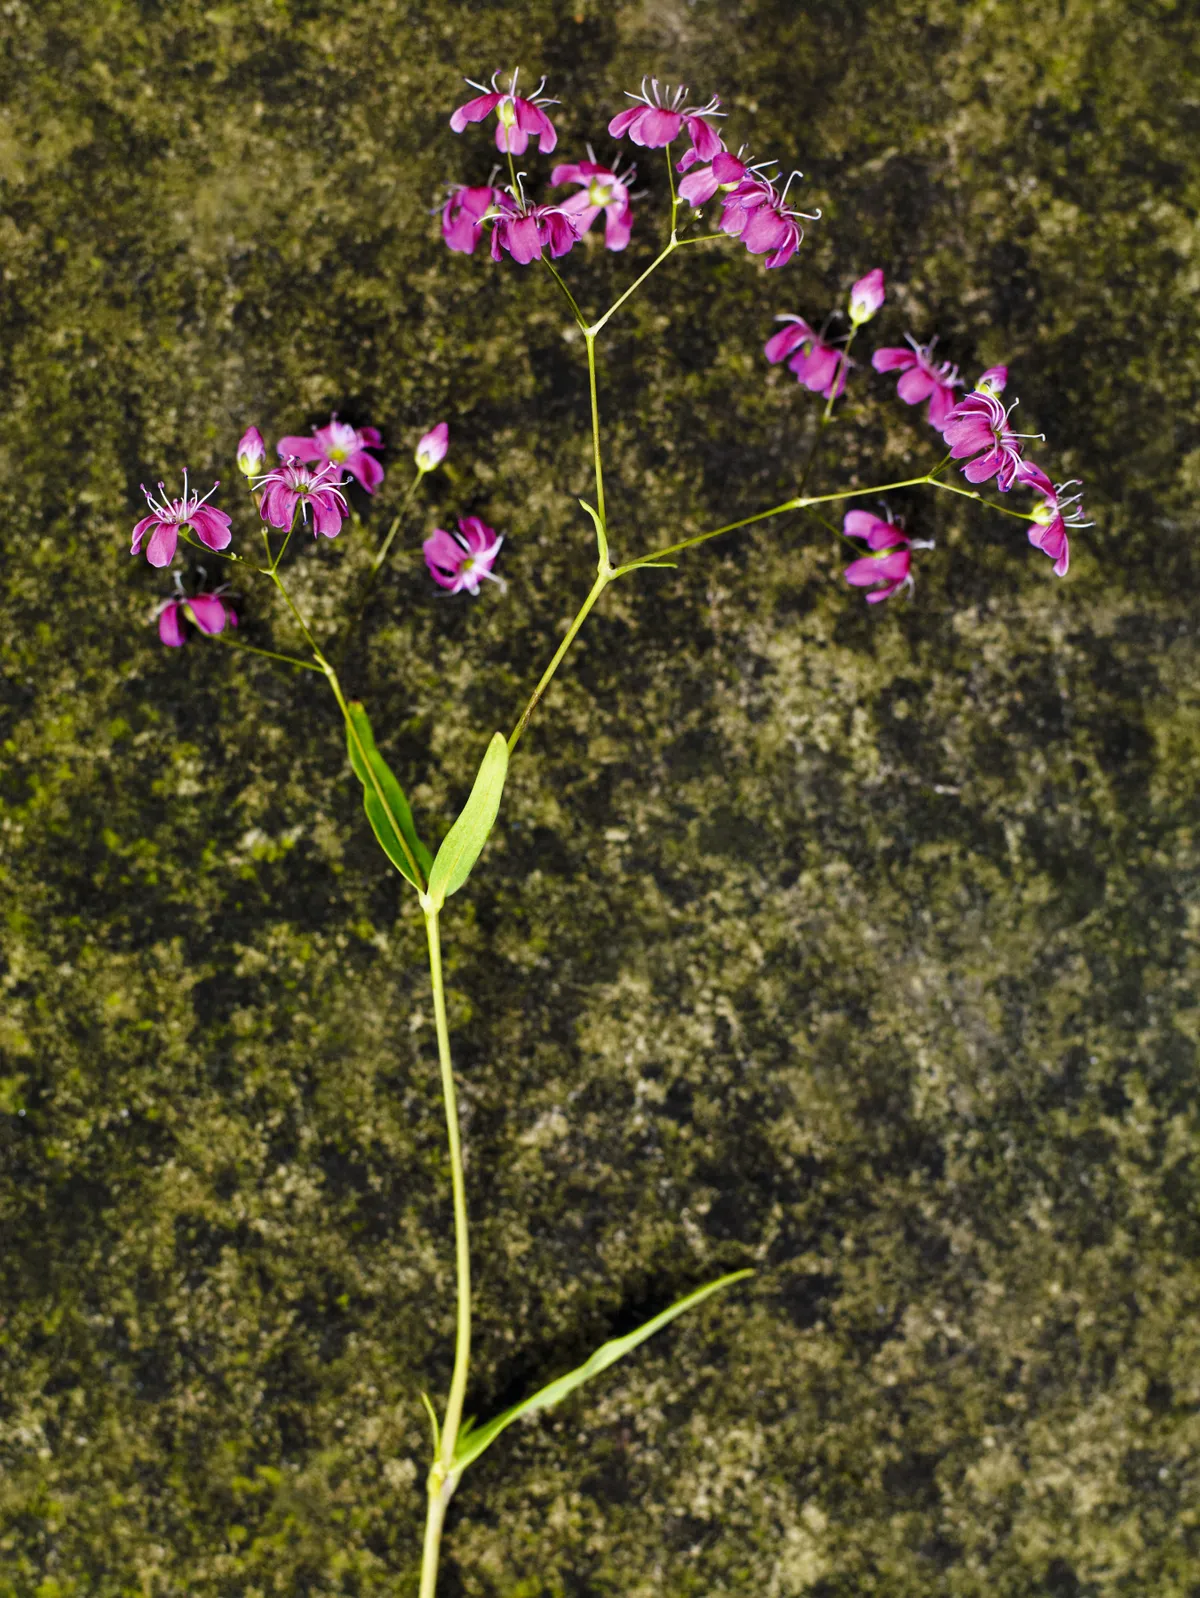 A single bright pink stem of flowering Gypsophila elegans ‘Kermesina’